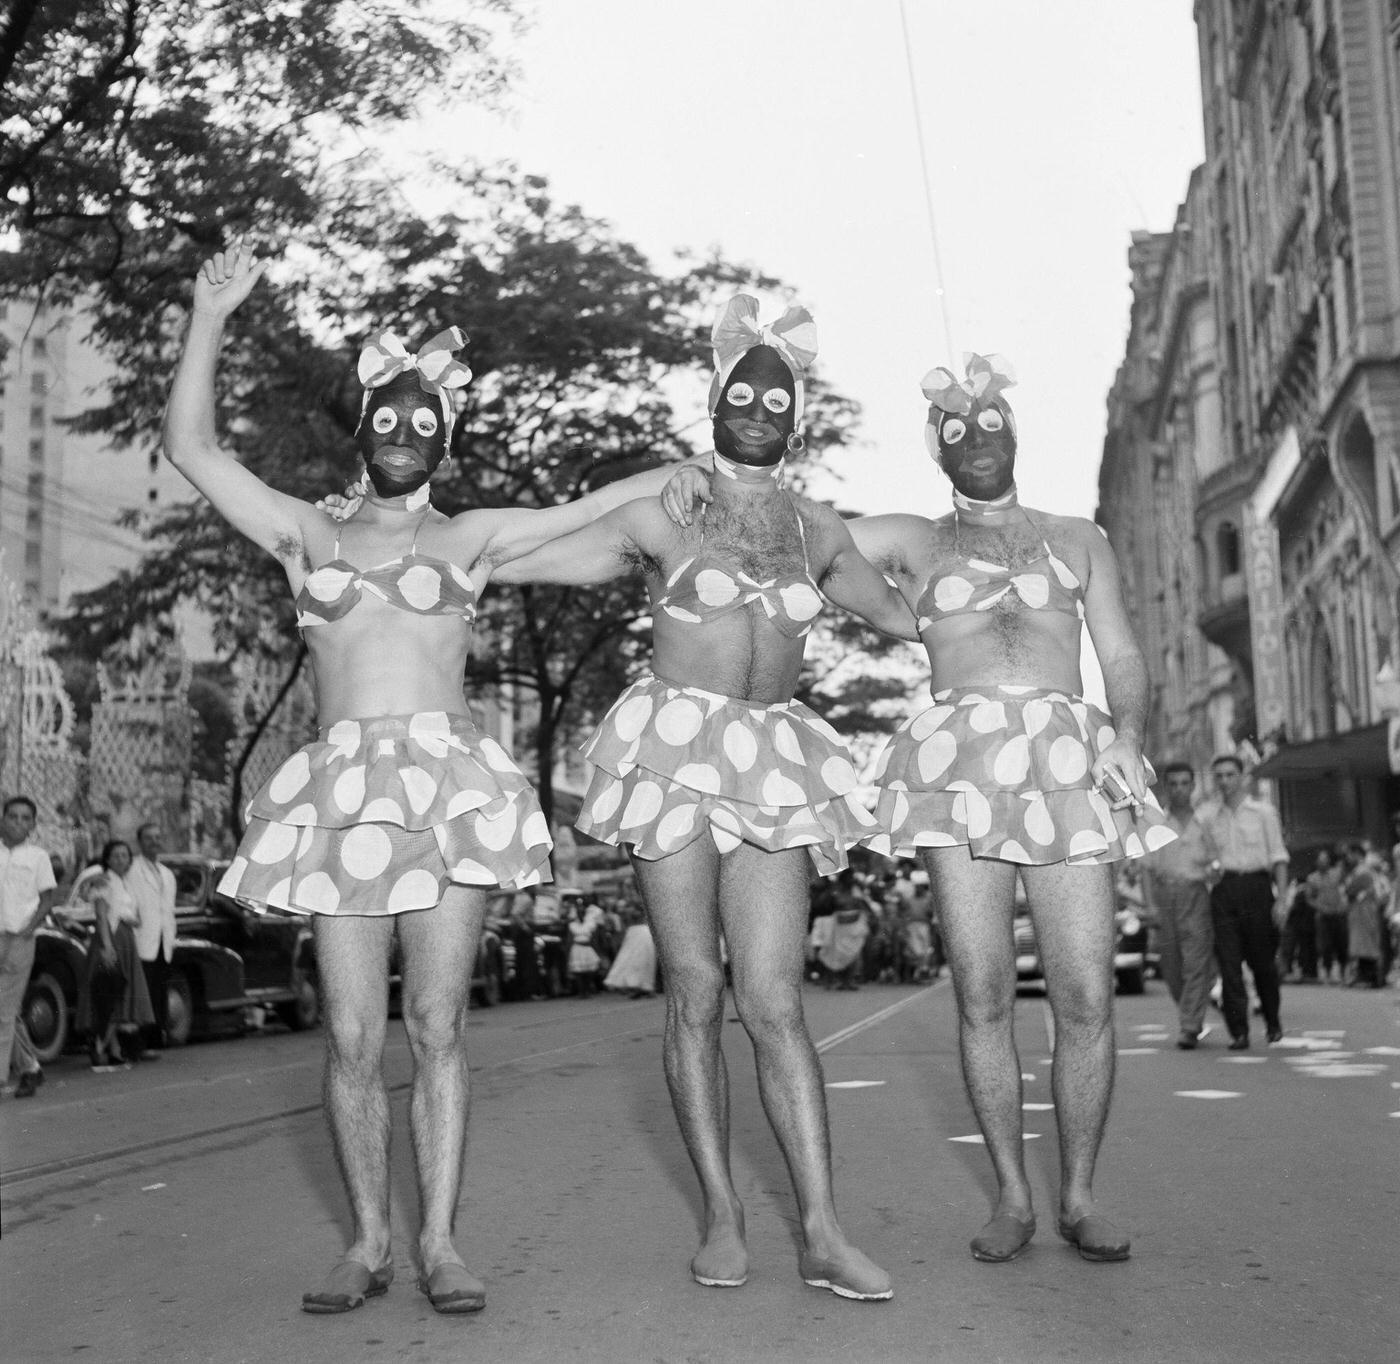 Posers in Street, Rio Carnival 1953